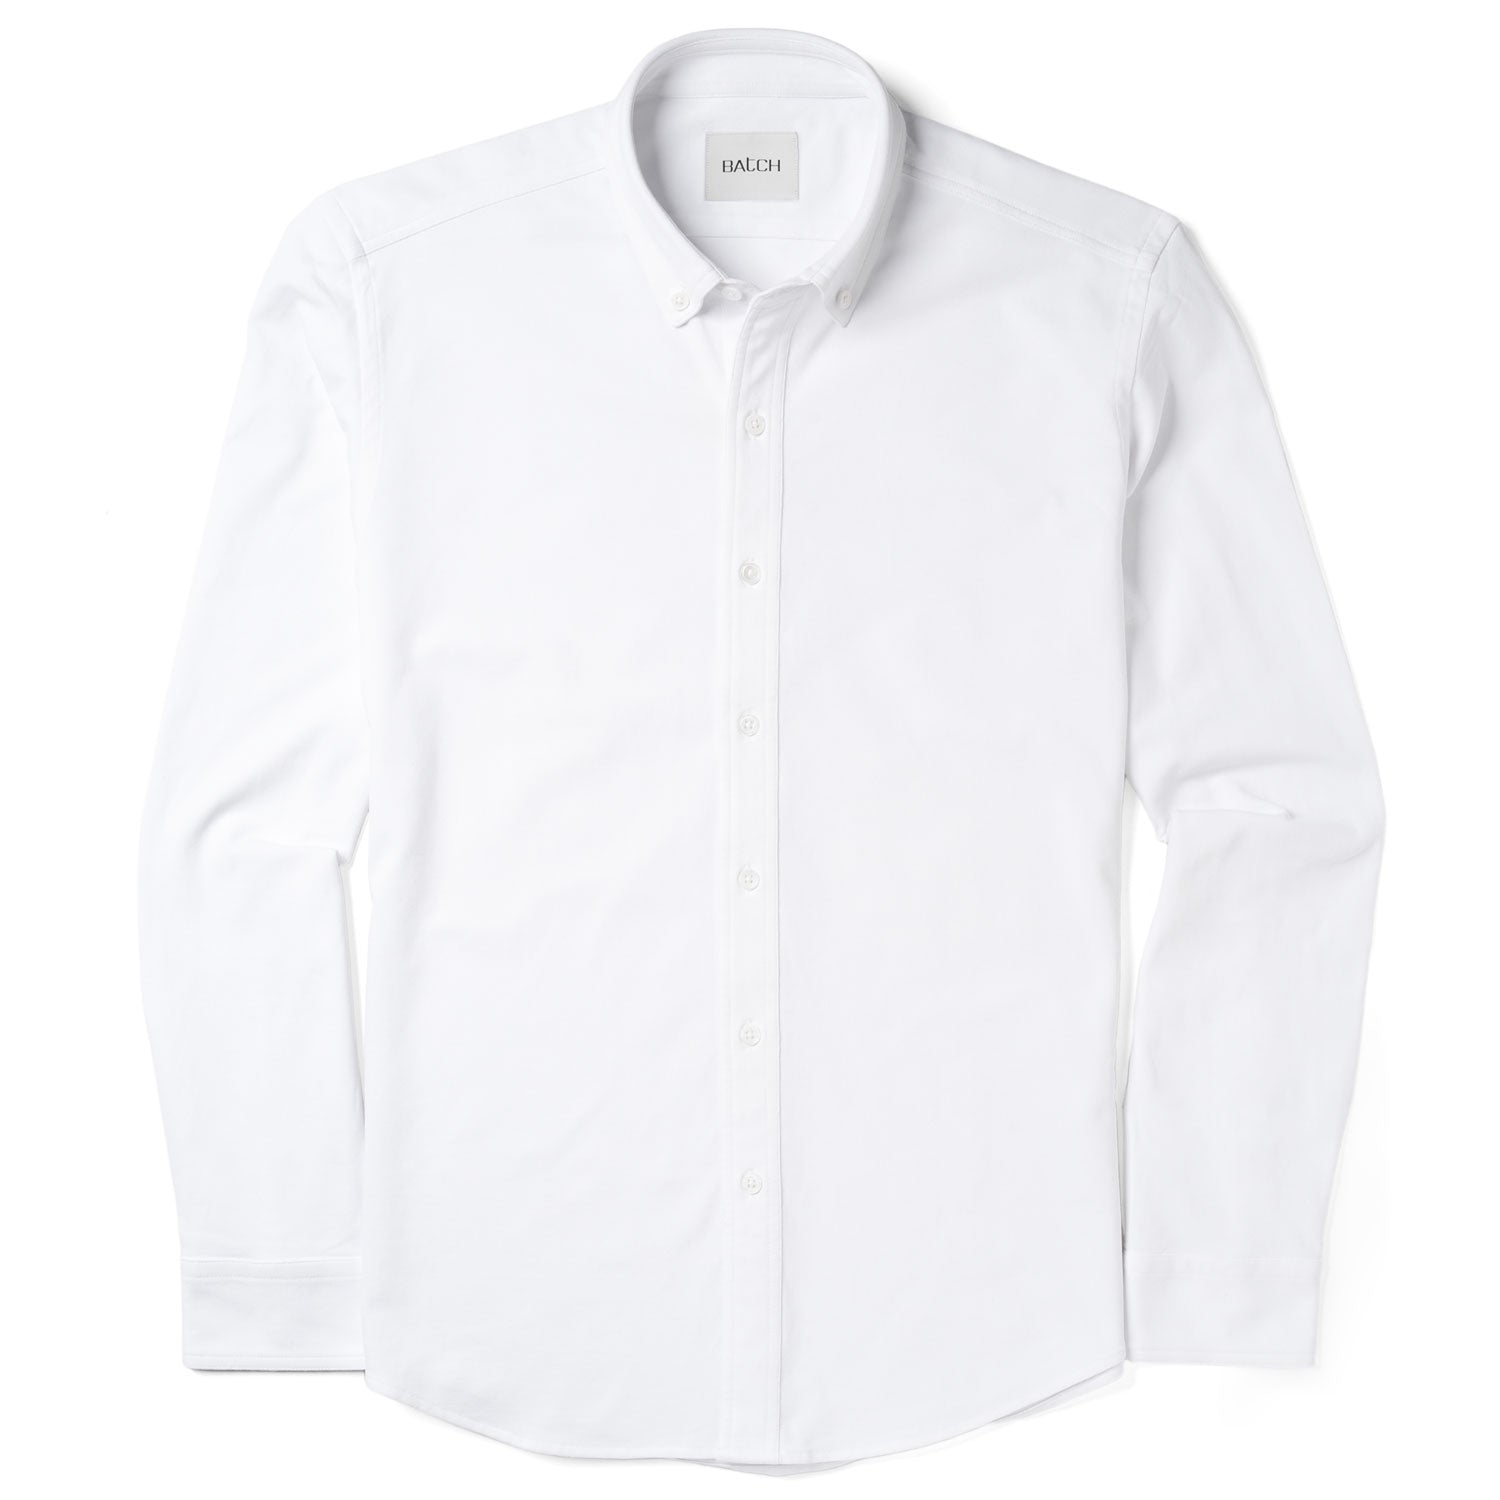 Essential Casual Knit Shirt - White Cotton Knit Pique